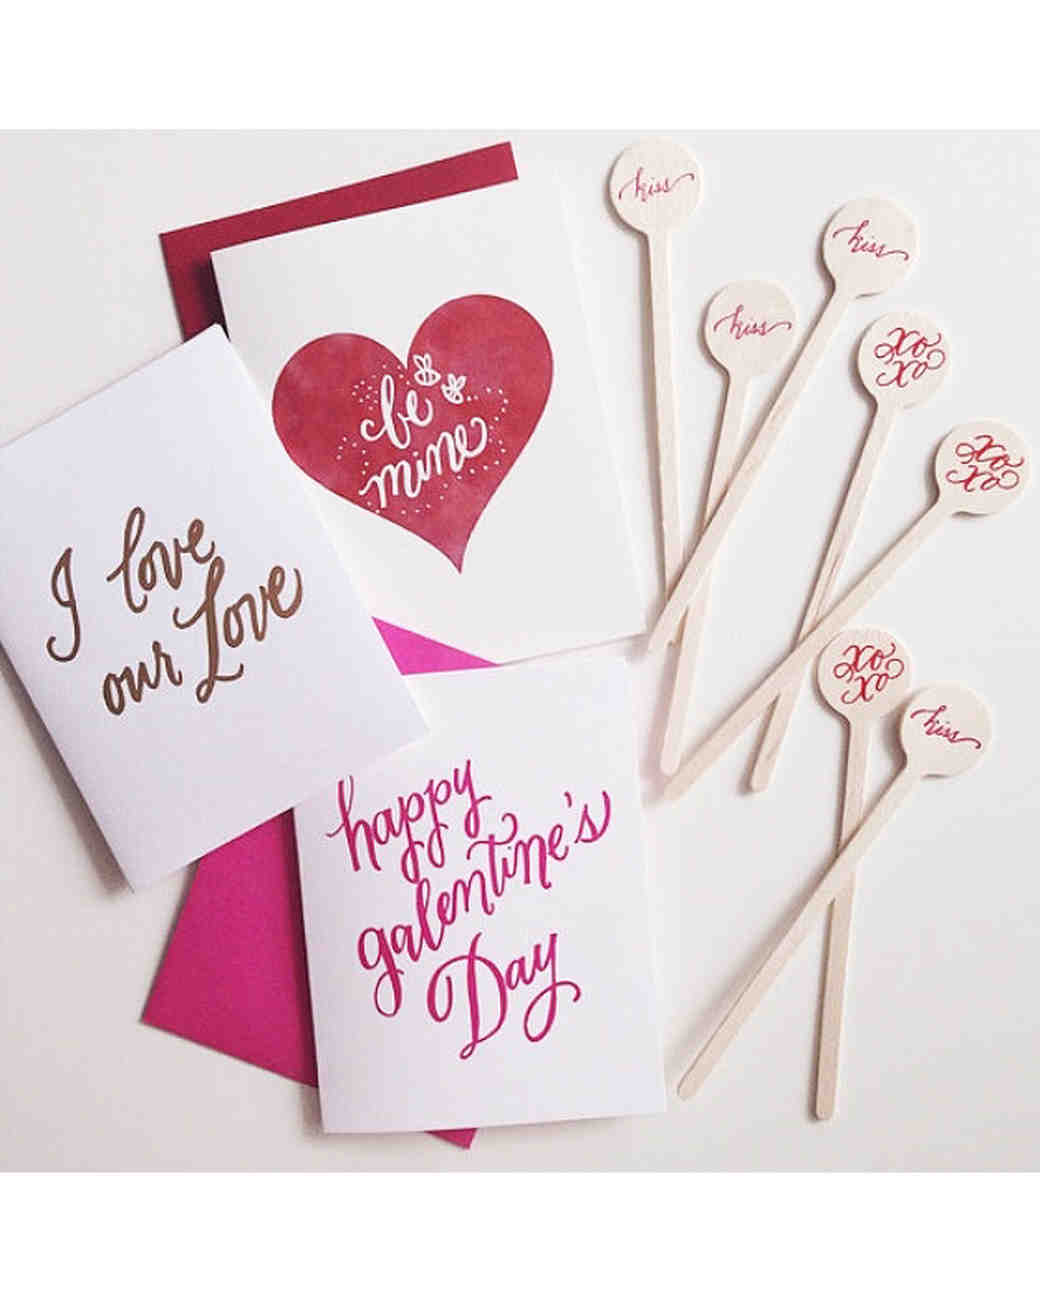 7 Décor Ideas for a Valentine's Day Party | Martha Stewart Weddings